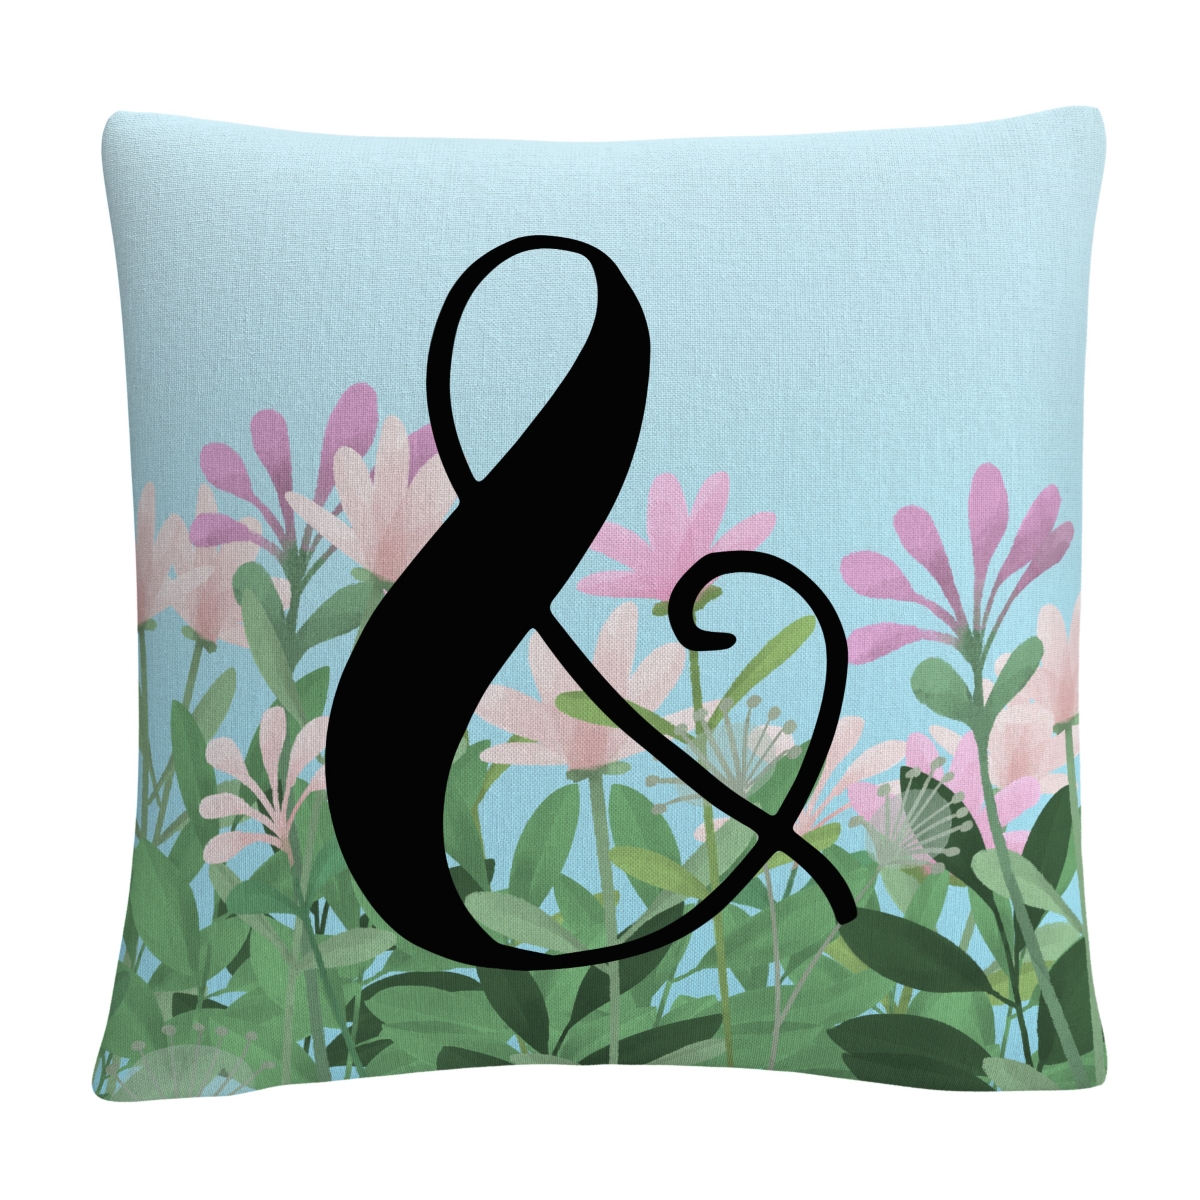 Abc Pink Floral Garden Letter Illustration Ampersand Decorative Pillow, 16 x 16